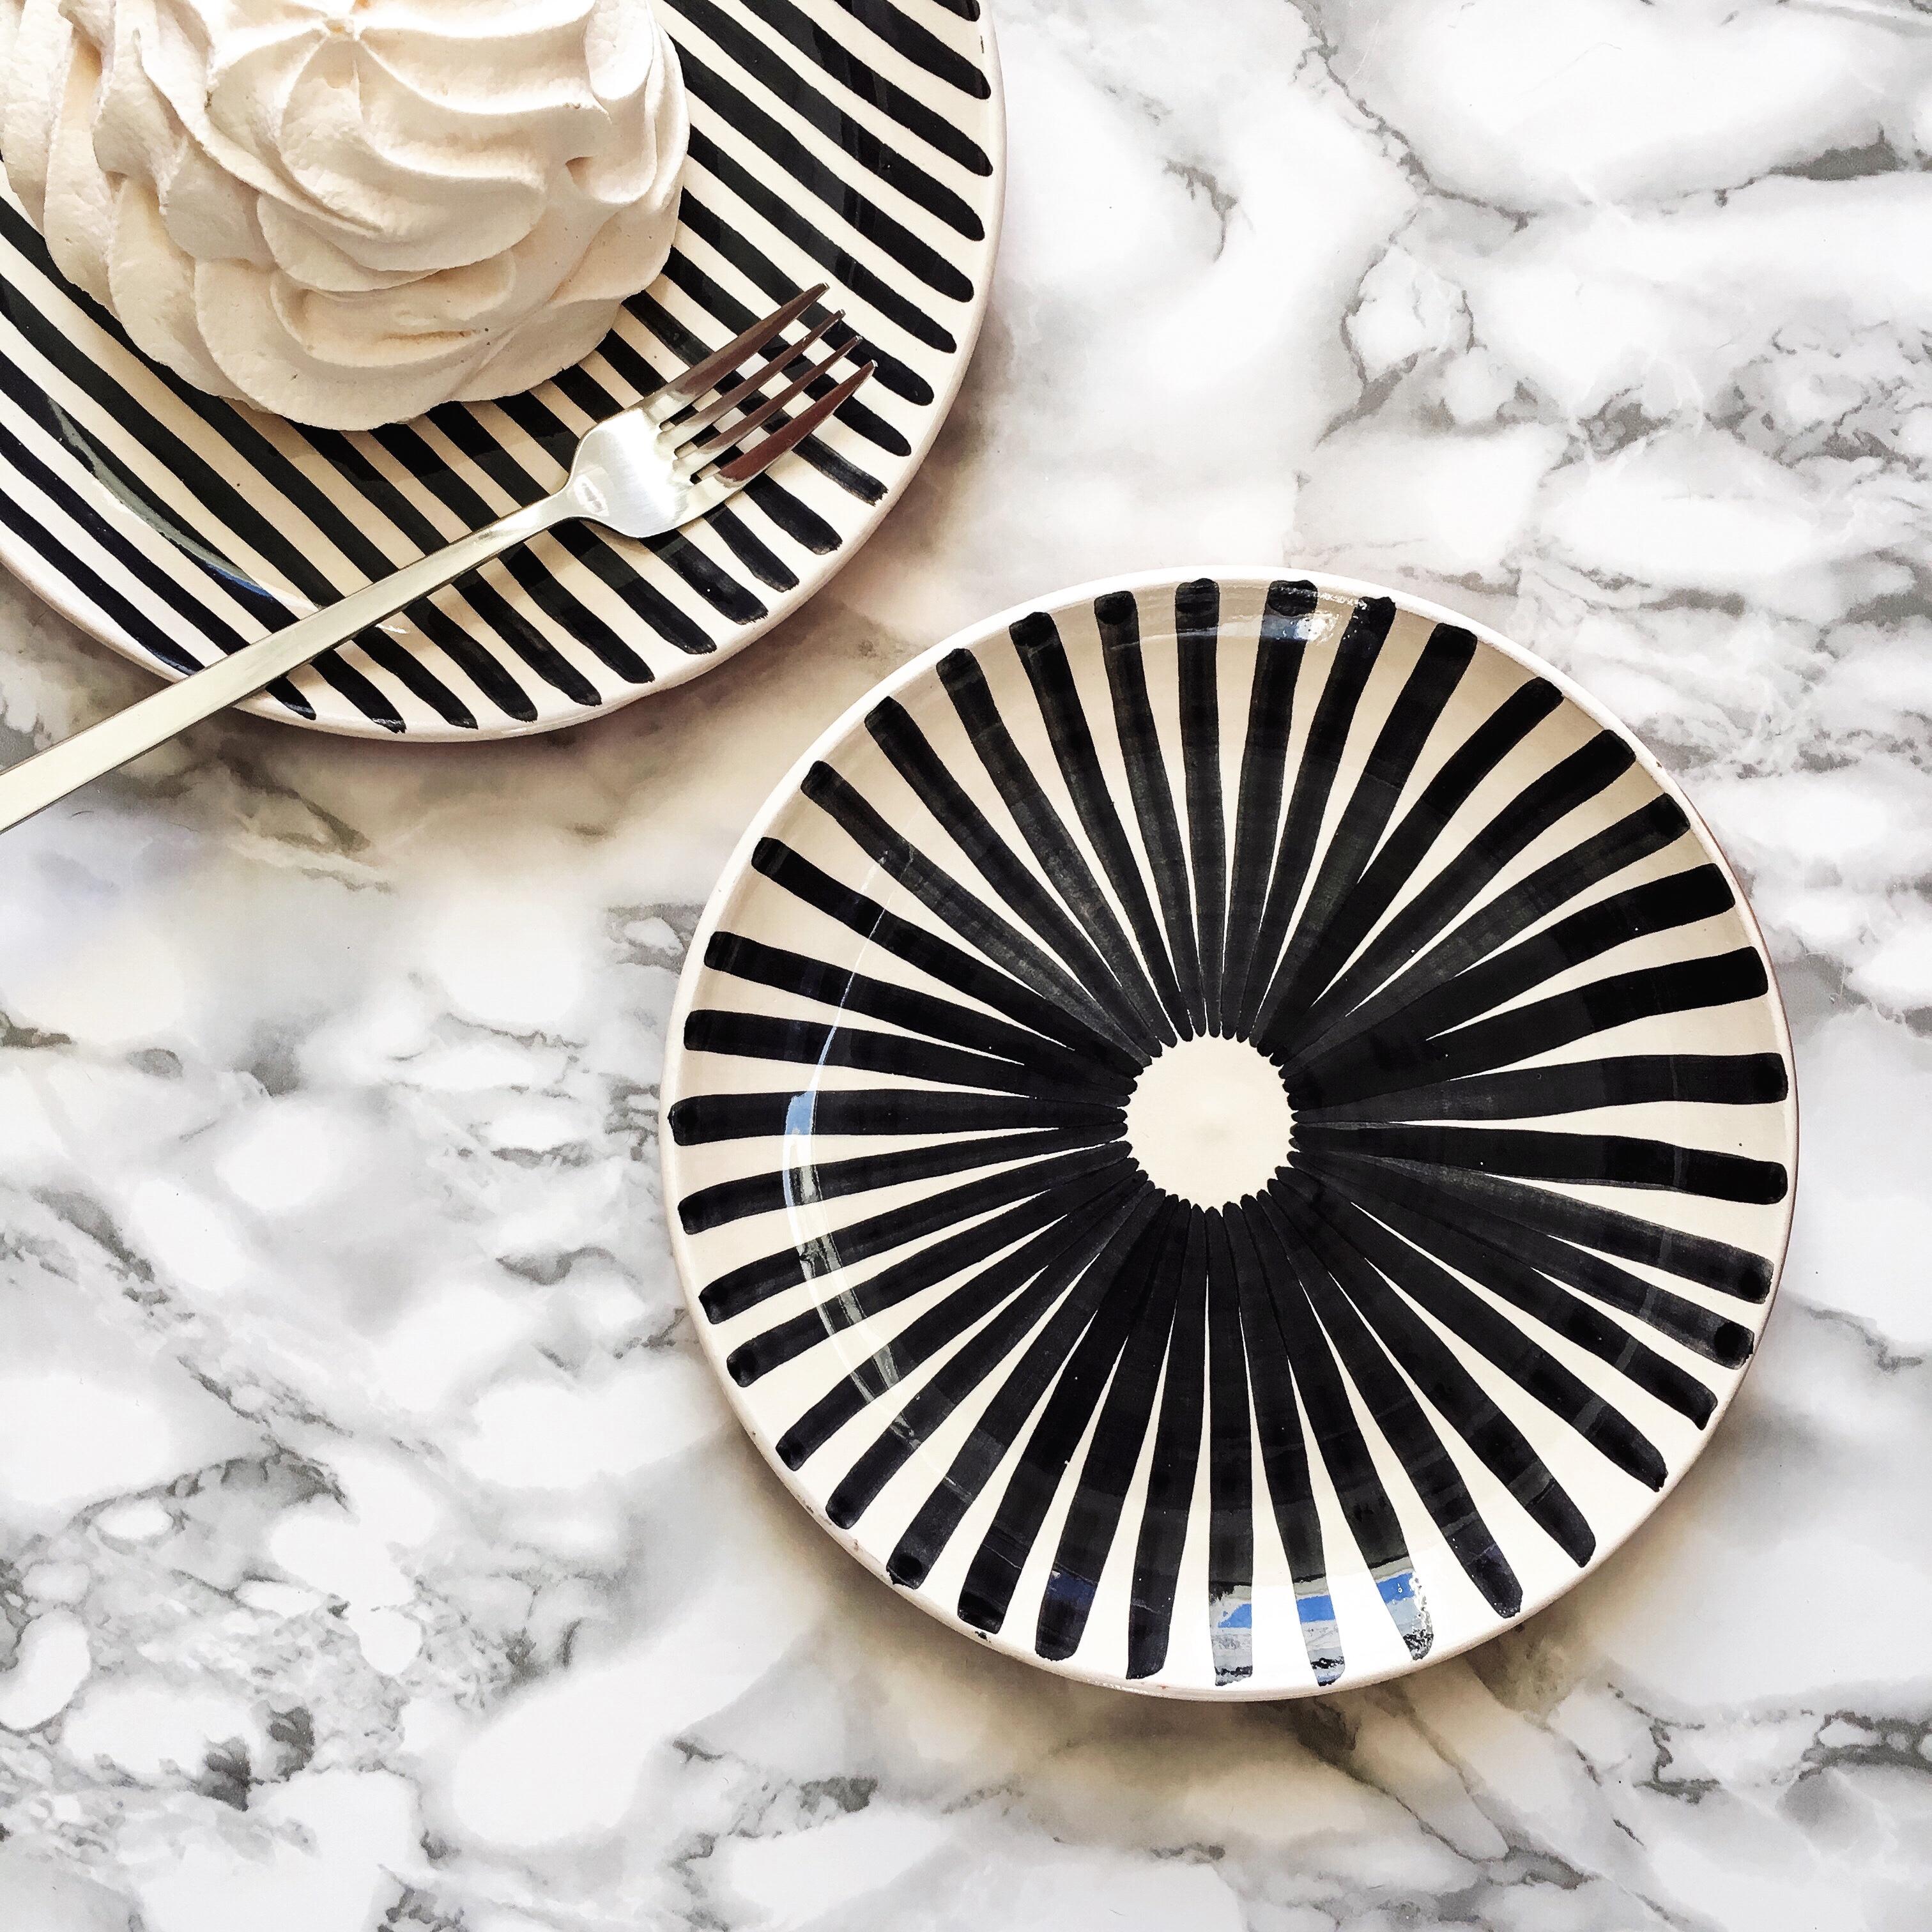 black and white ceramic plates